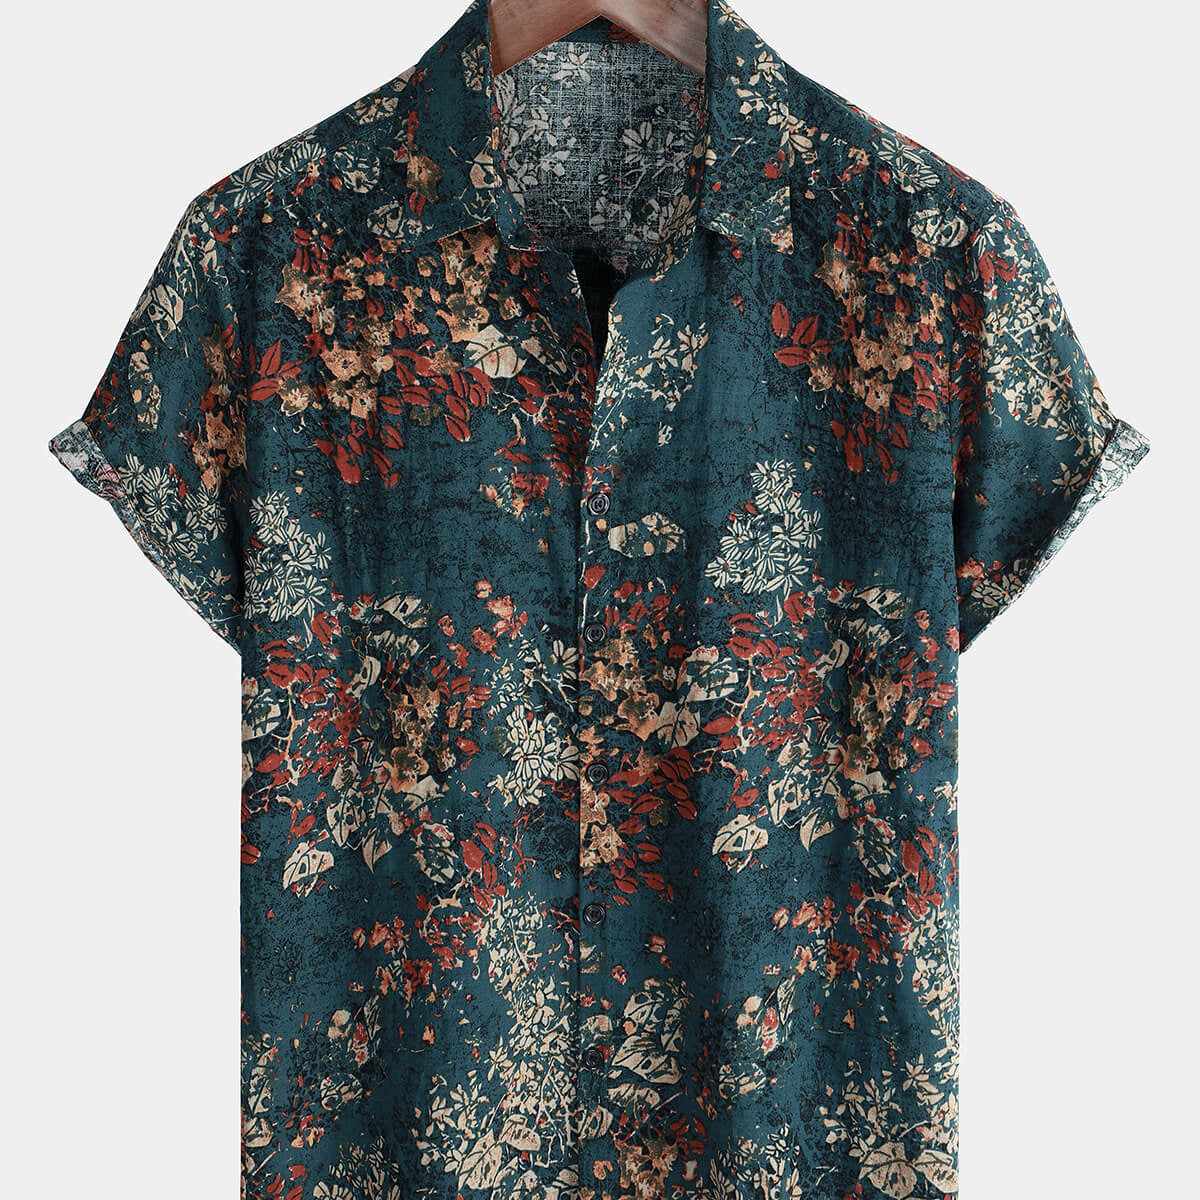 Men's Vintage Holiday Retro Cotton Floral Button Up Short Sleeve Shirt